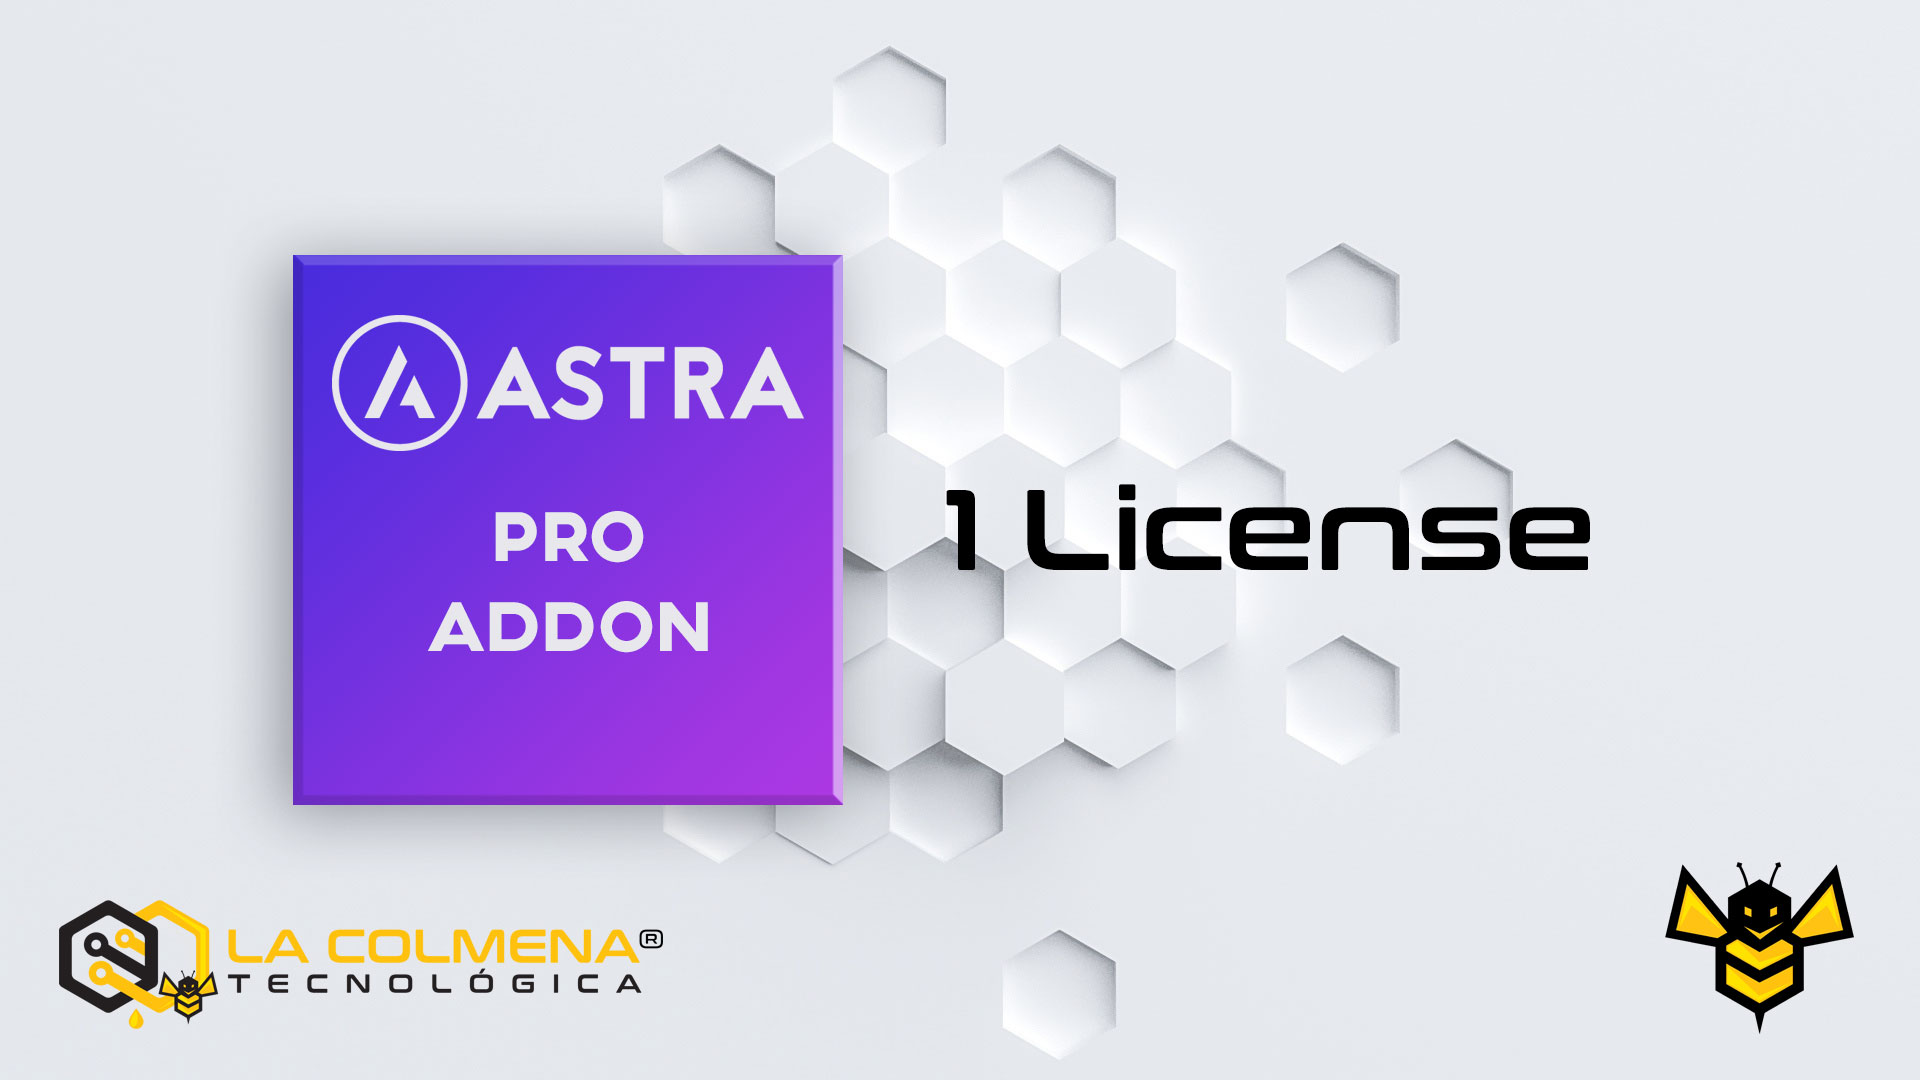 Astra Pro Addon License